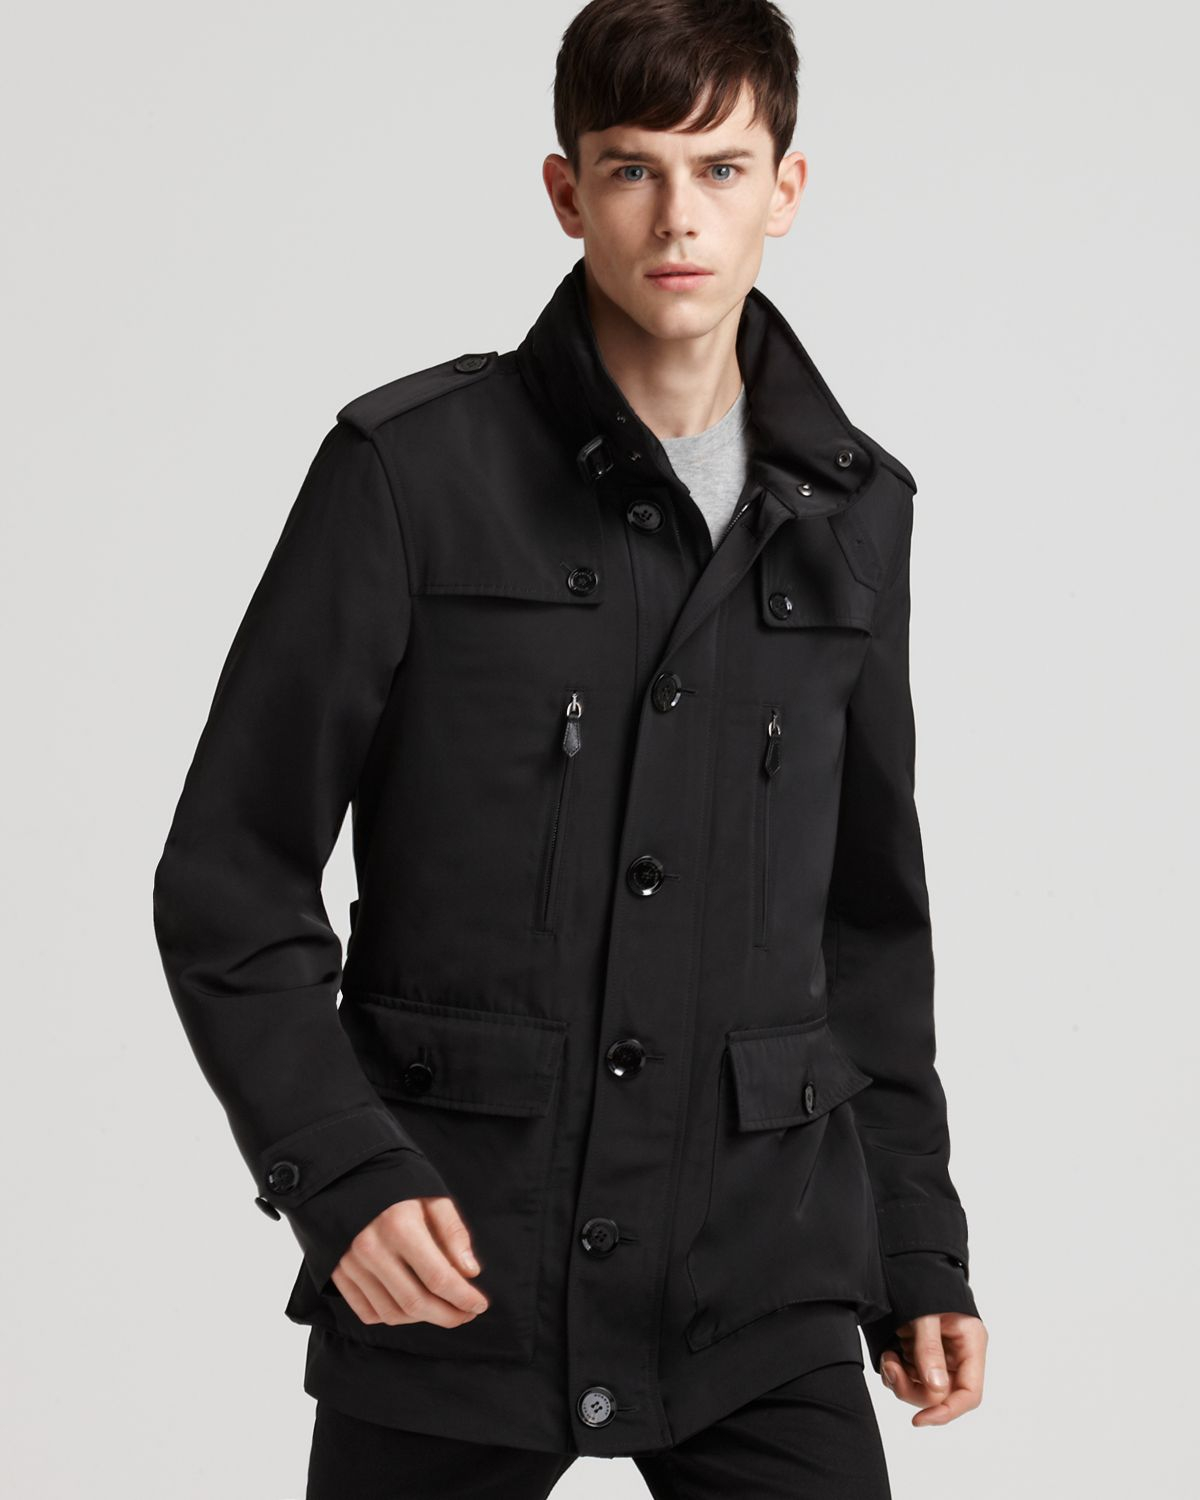 Lyst - Burberry Brit Bowden Raincoat in Black for Men